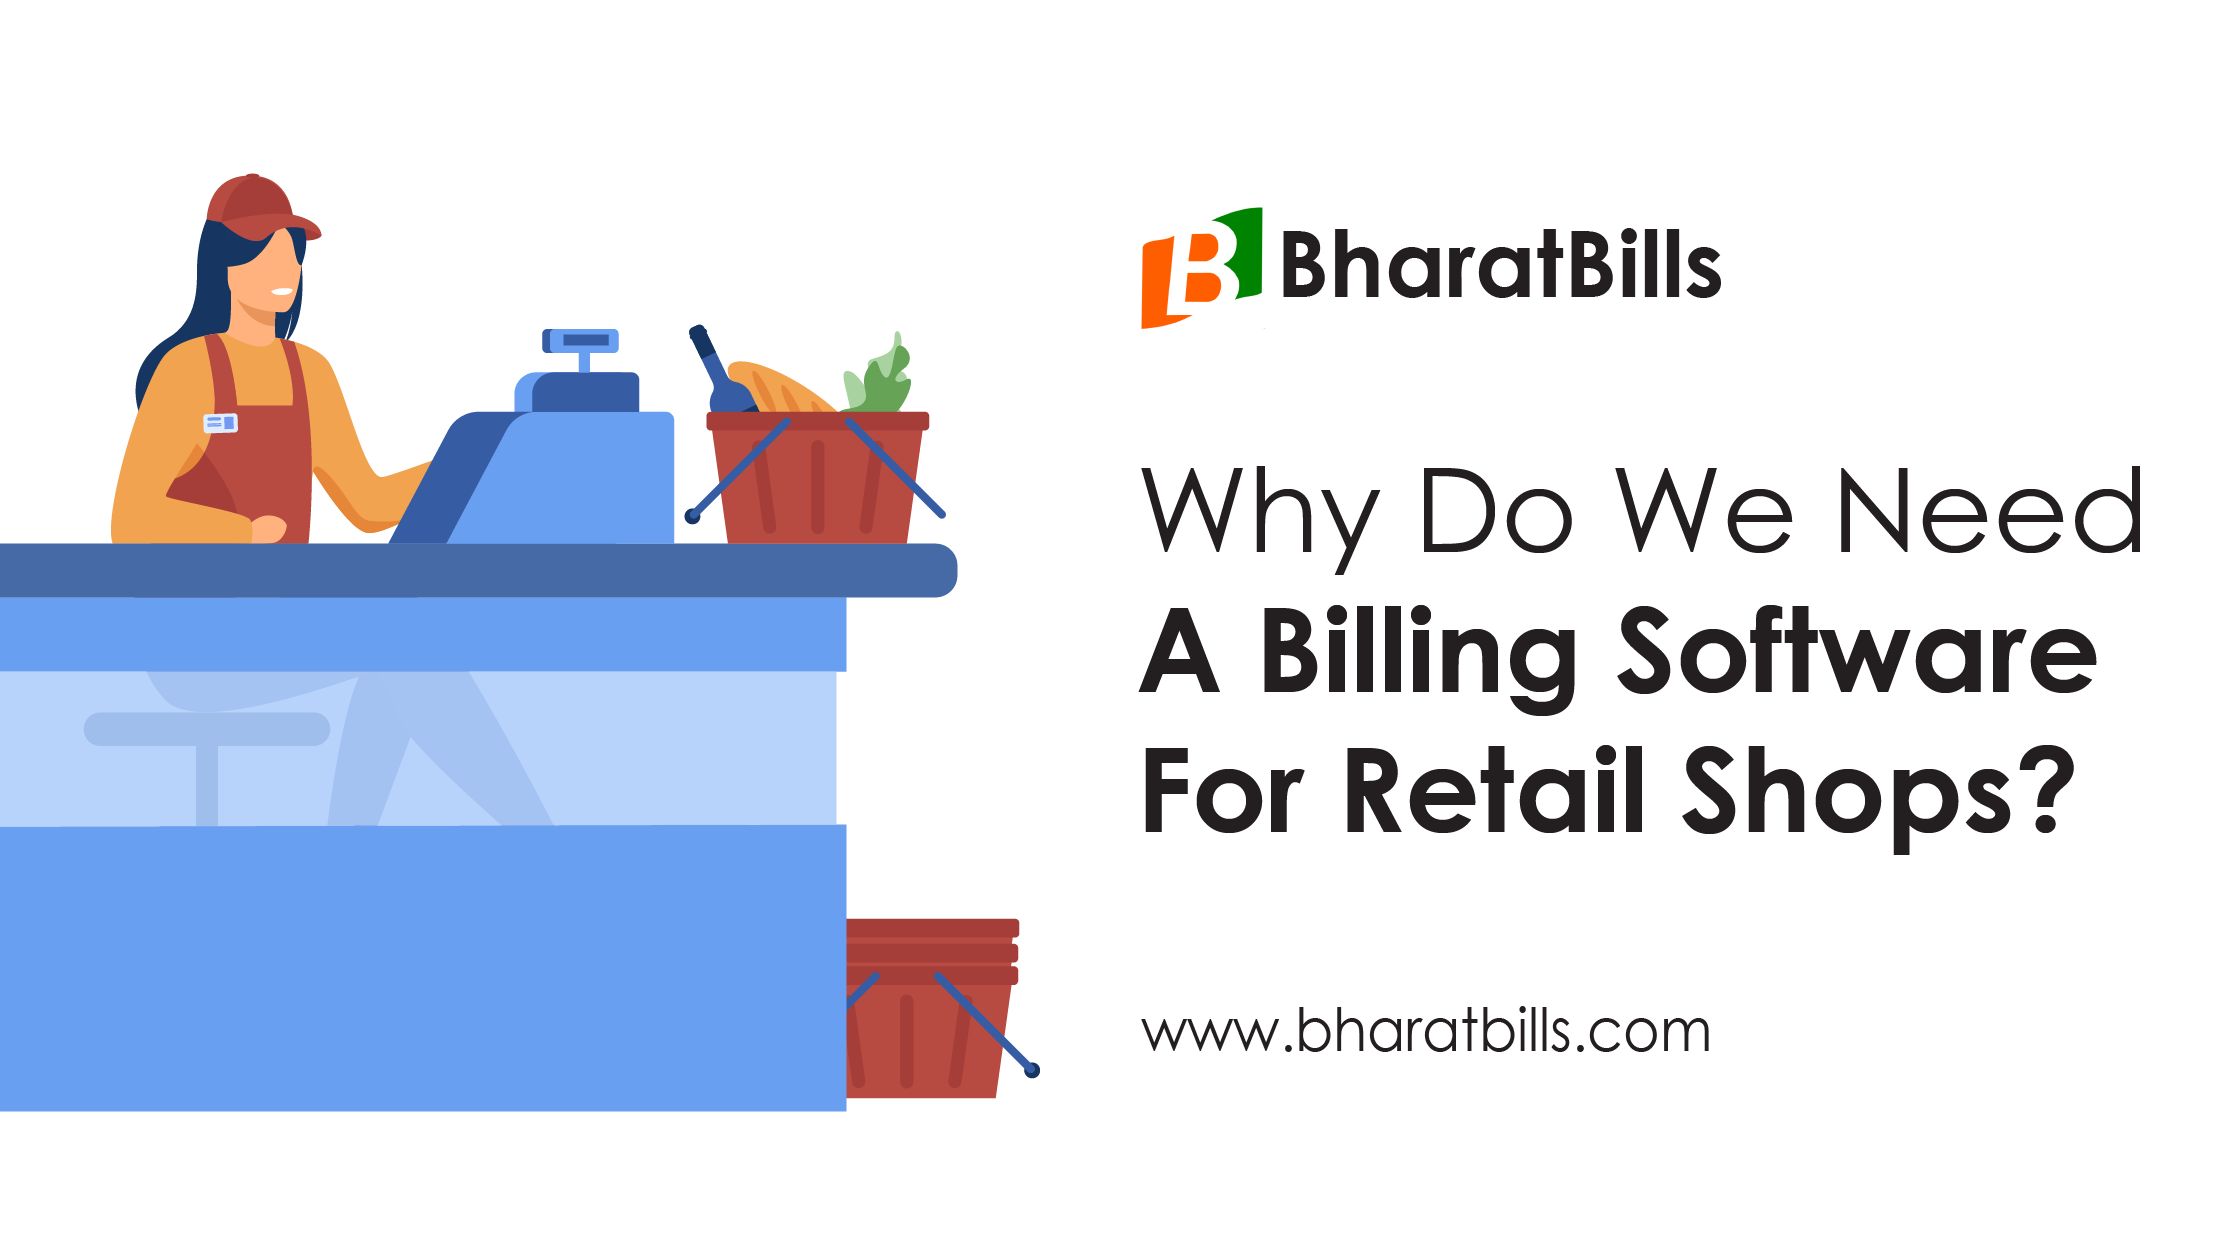 Billing Software for Retail shops